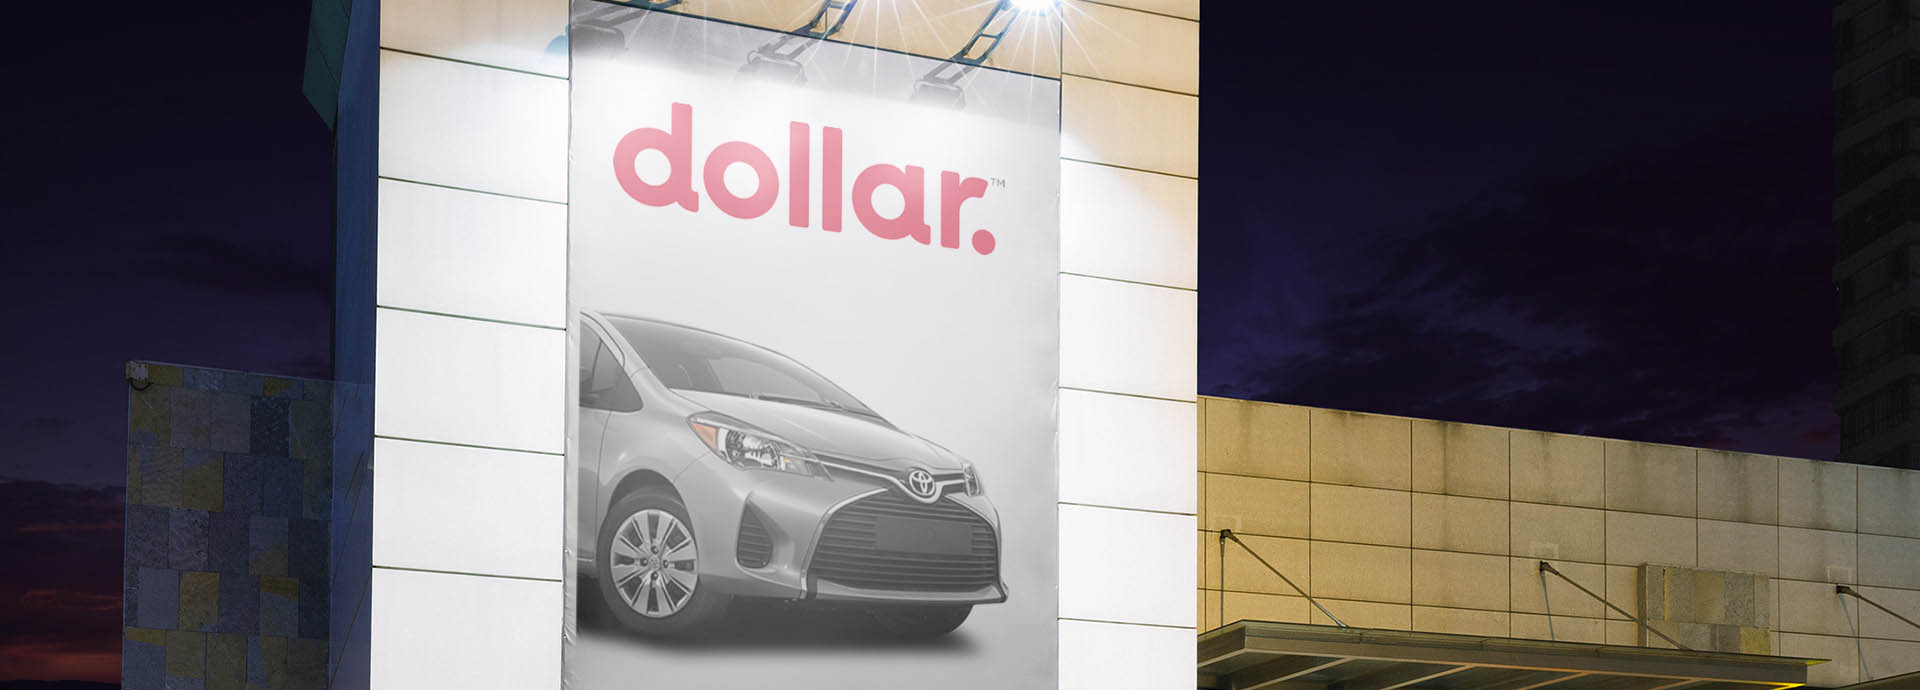 Dollar Rent a Car - Alquiler de autos | RentingCarz